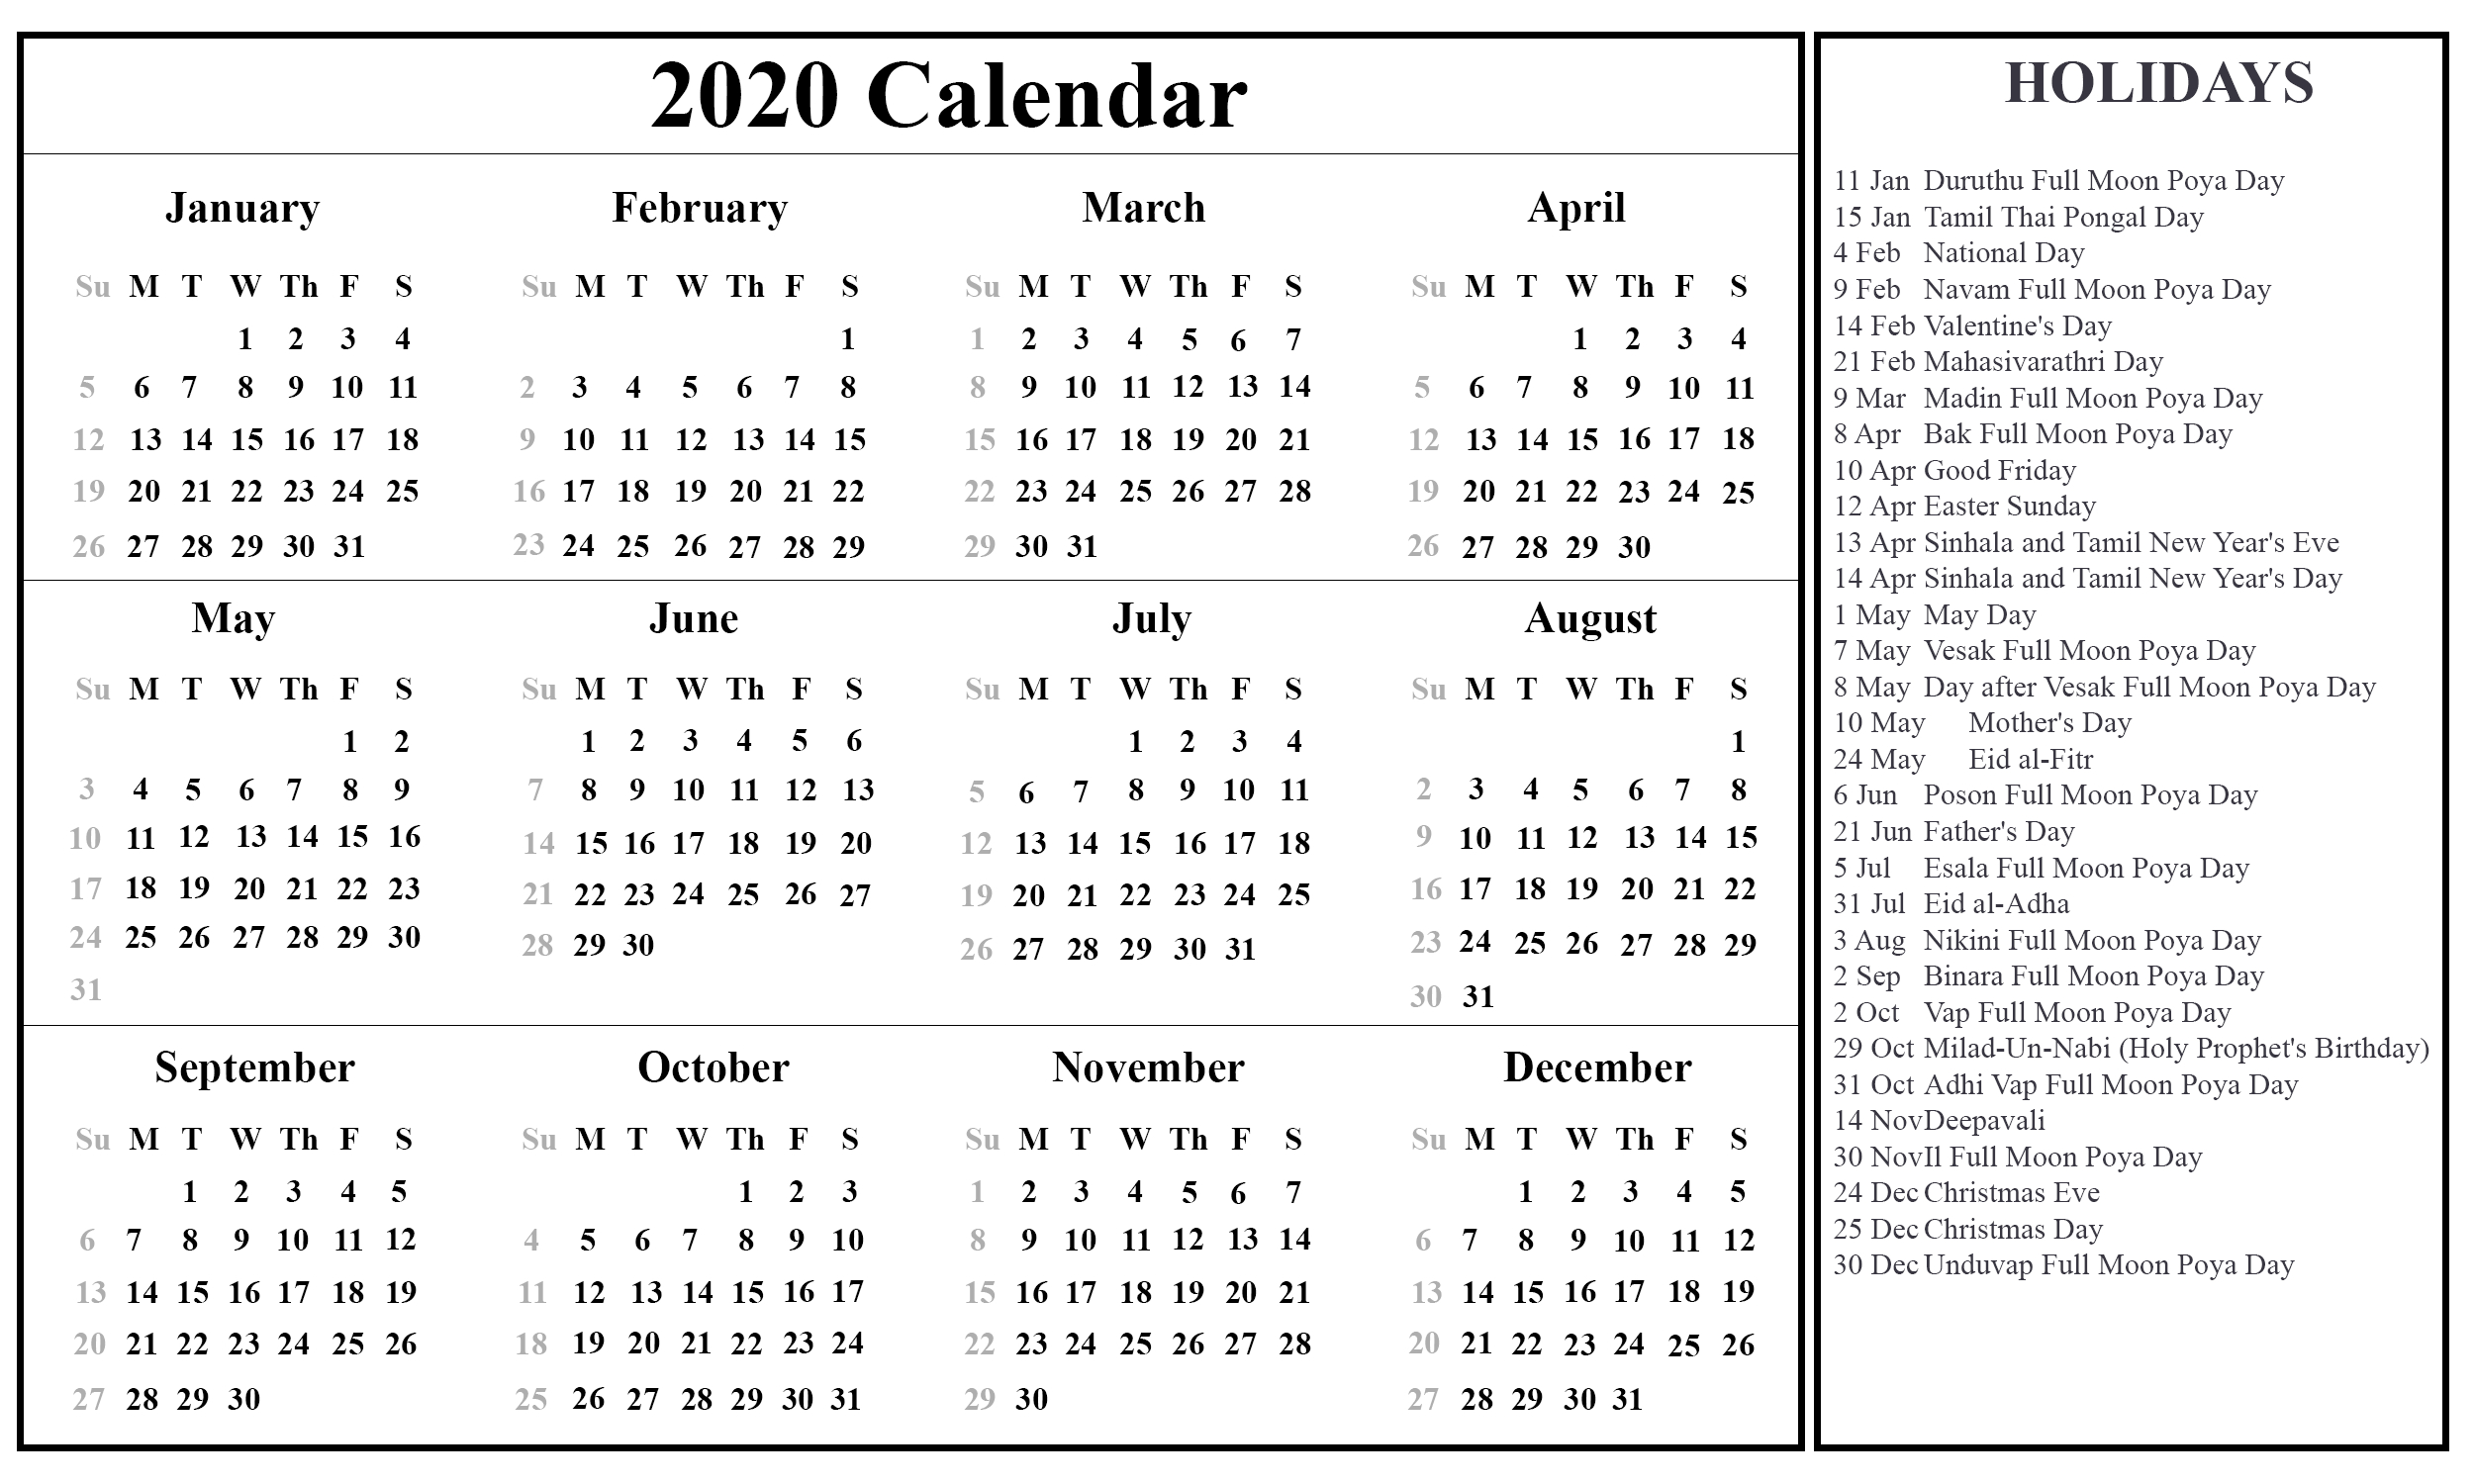 Srilanka-Holiday-2020-1-Calendar 2021 Sri Lanka Merchantile Holidays